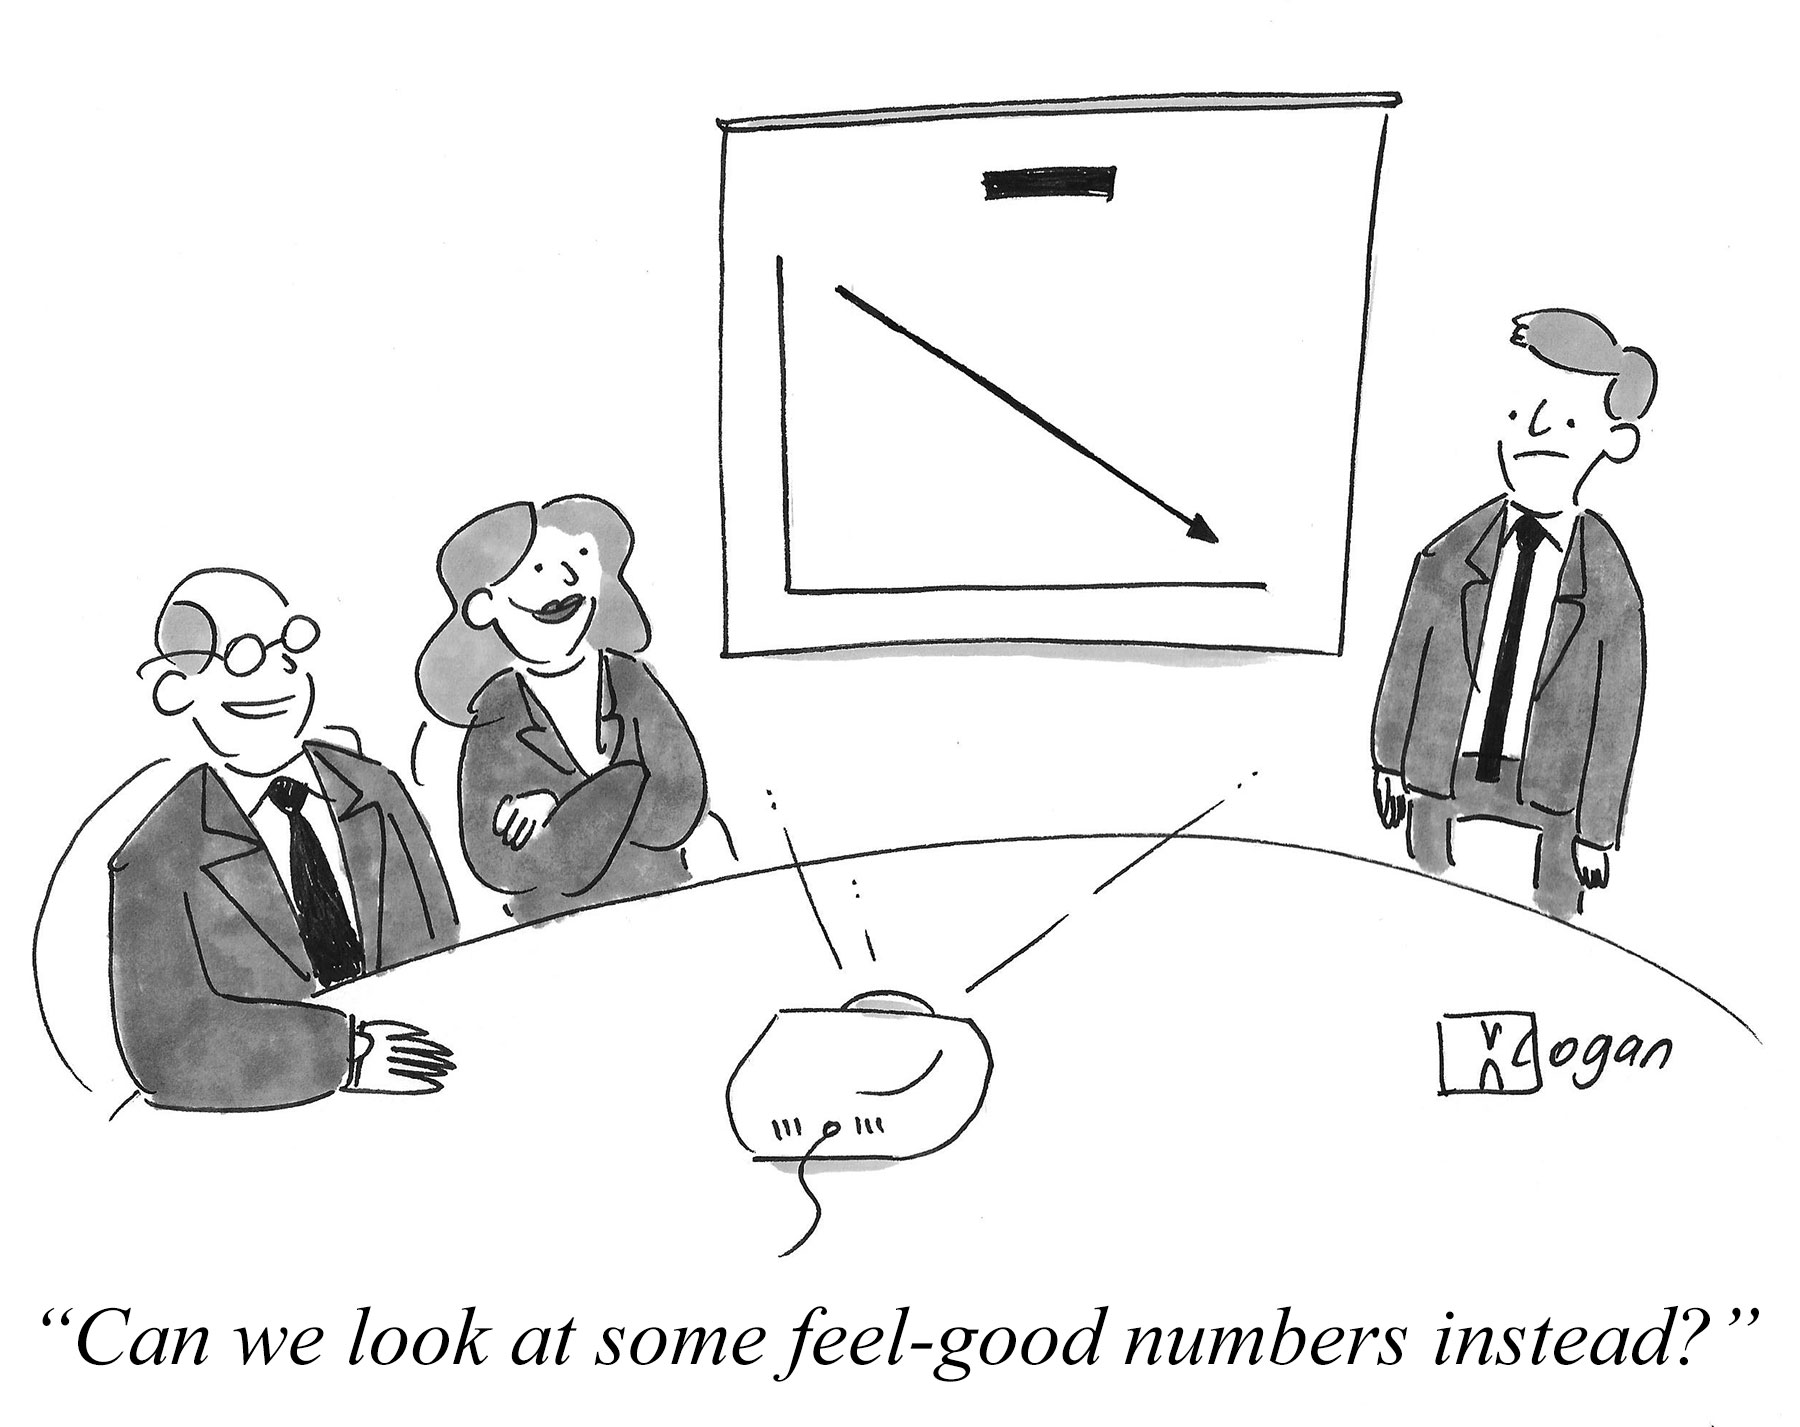 Cartoon about vanity metrics.